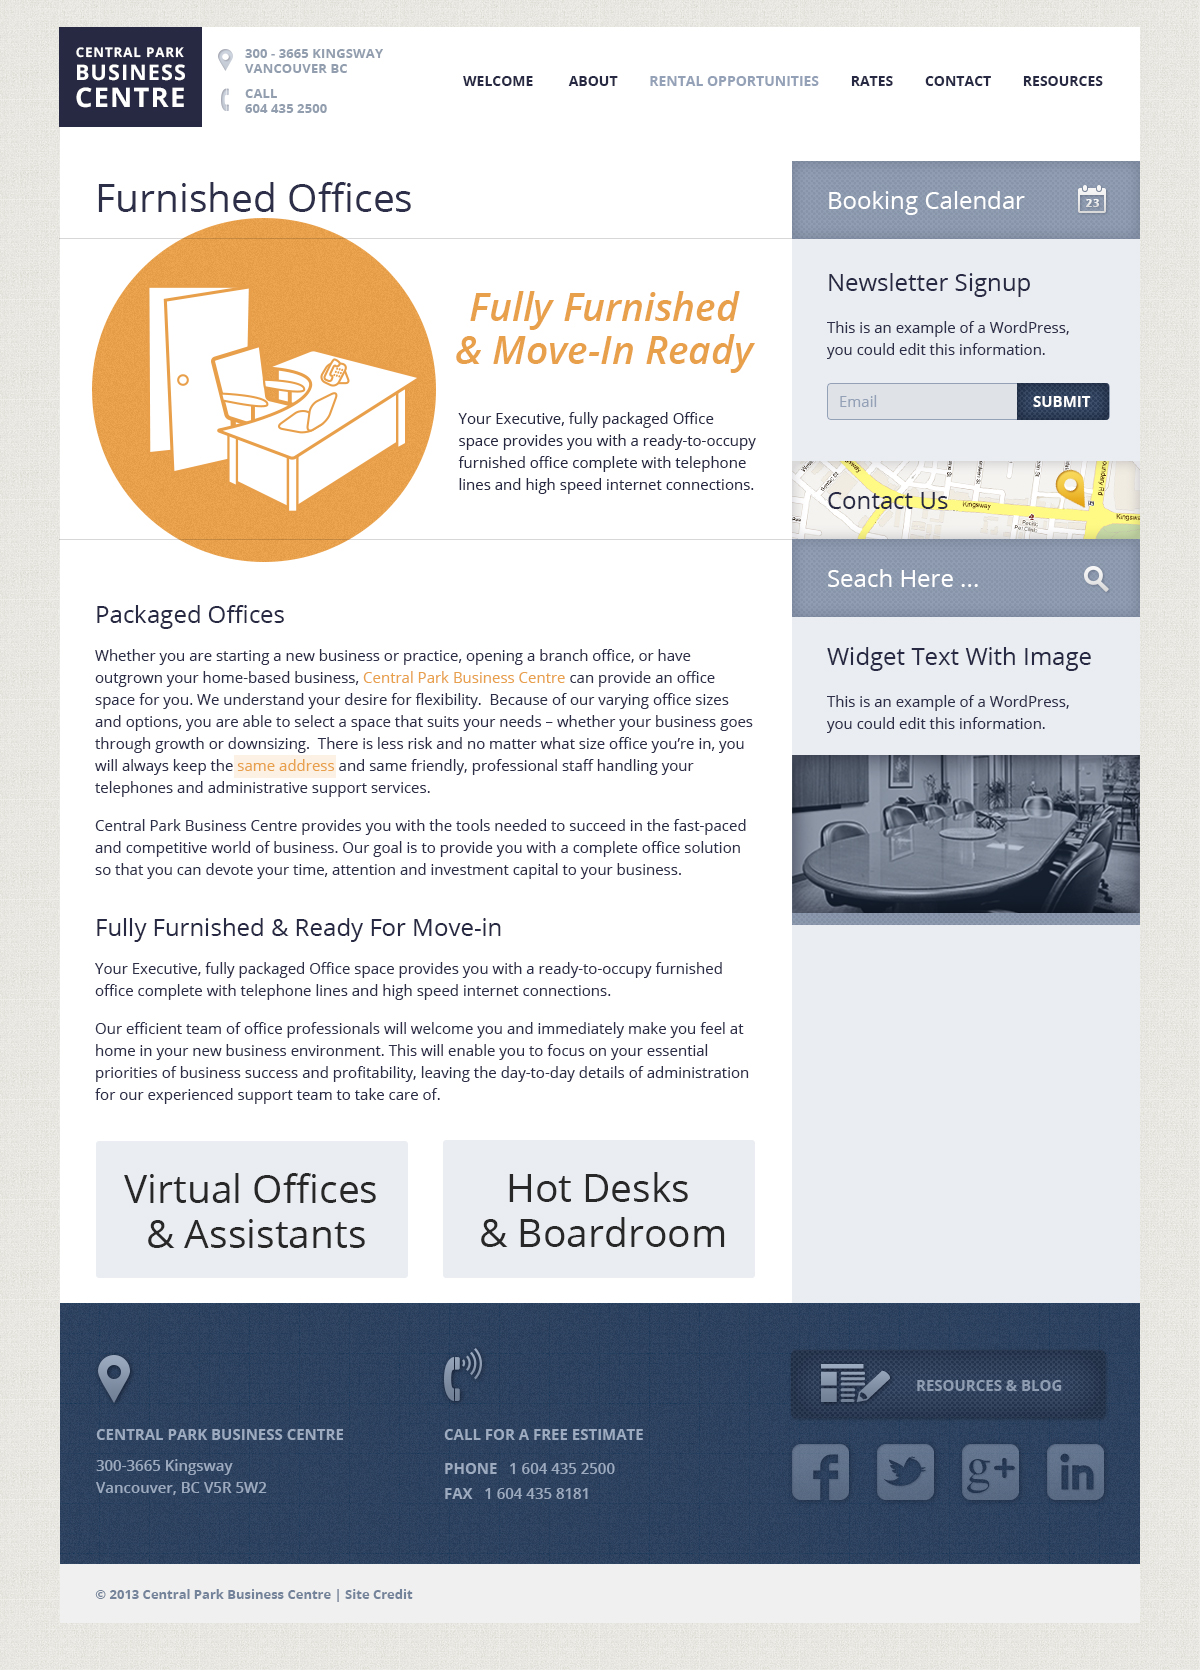 cpbc interior web design with orange flat cornerstone illustrations as 1st iteration